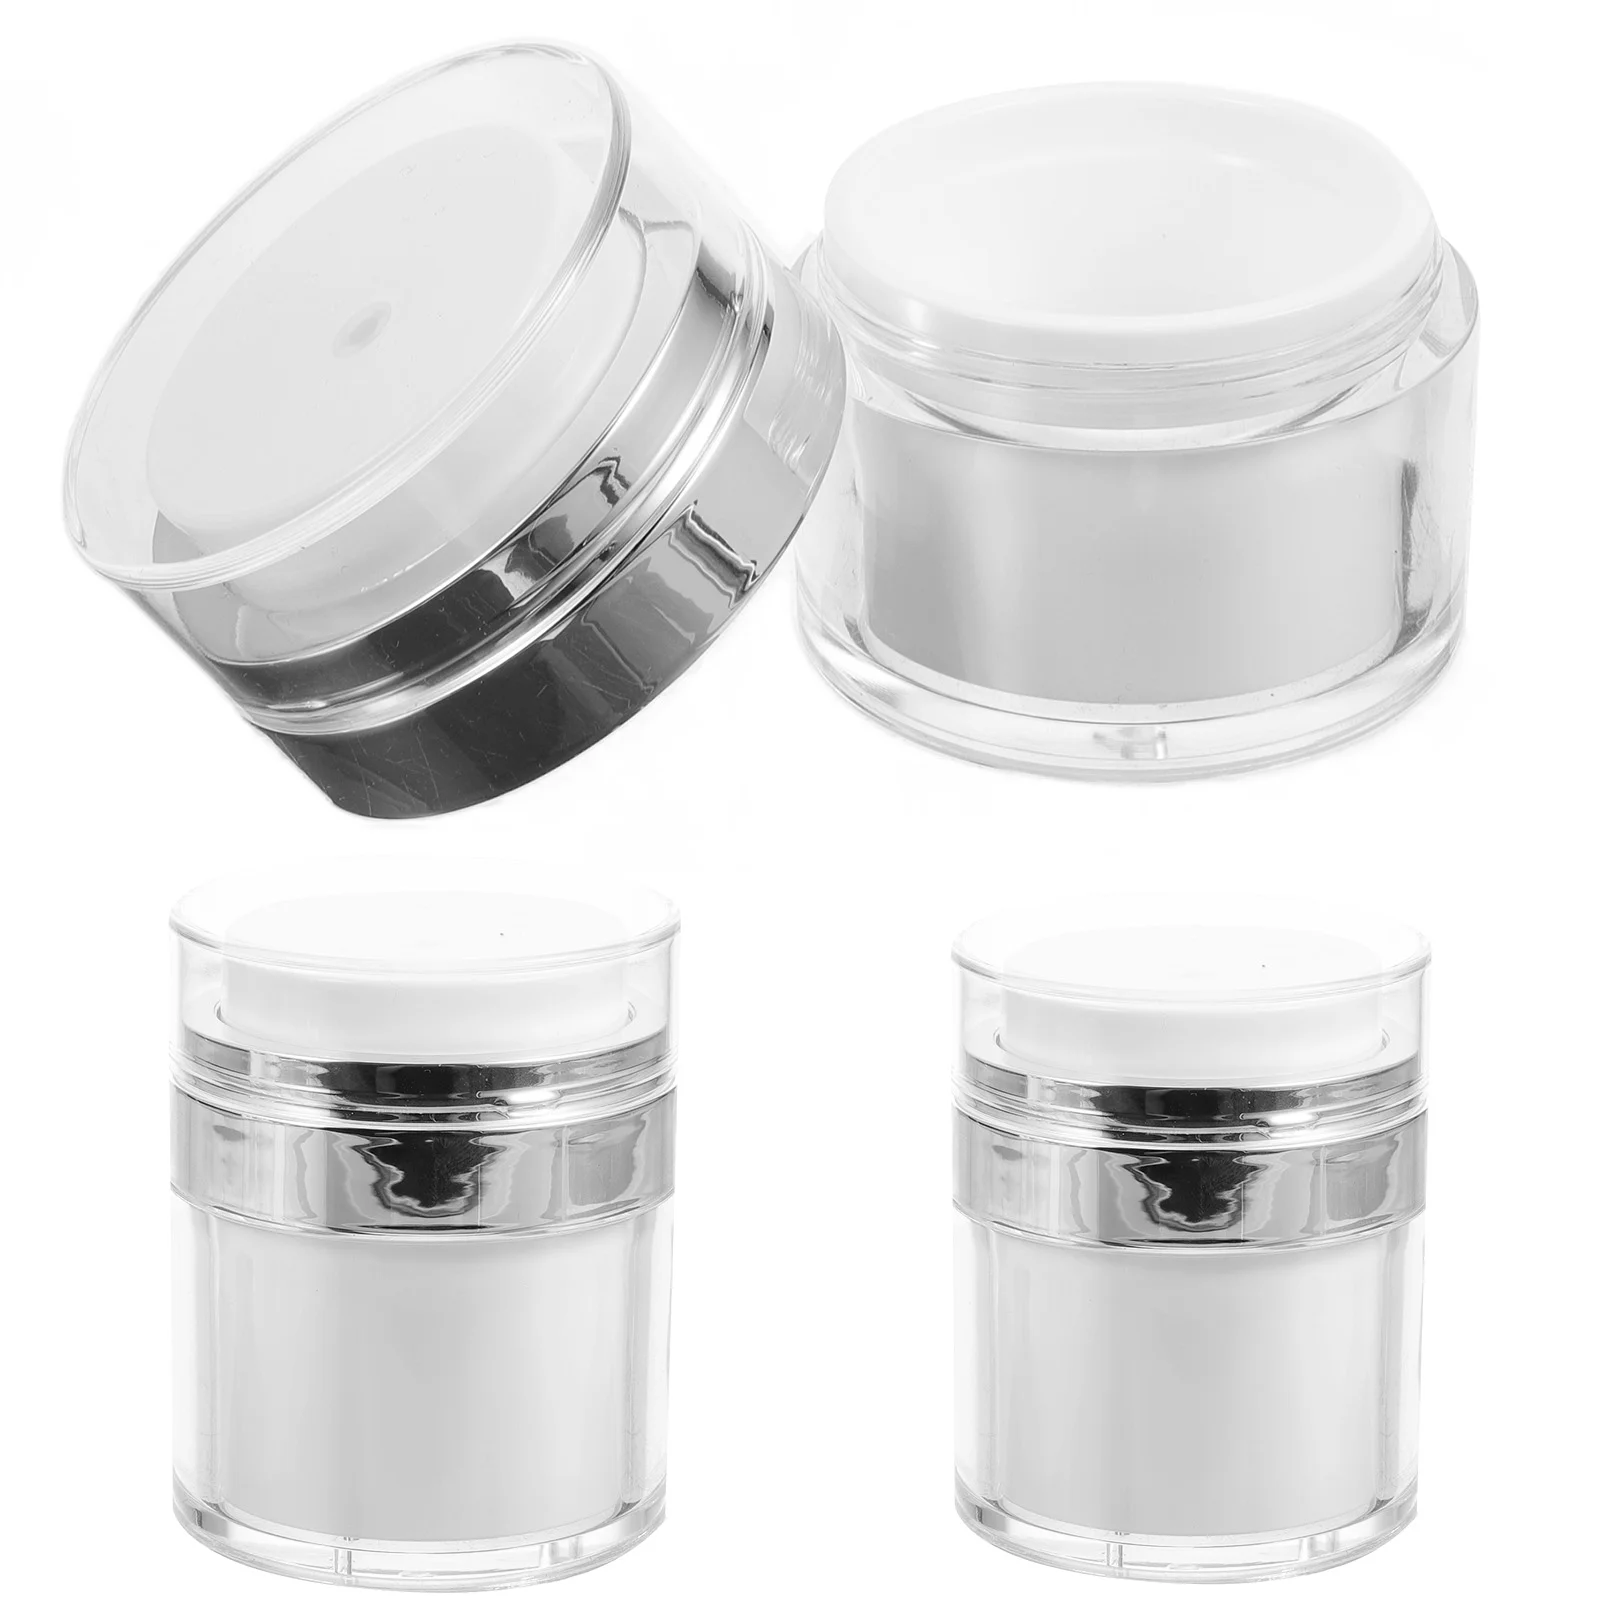 

3 Pcs Vacuum Cream Jar Portable Toiletry Bottles Refillable Creams Dispenser Makeup Travel Containers Box Acrylic